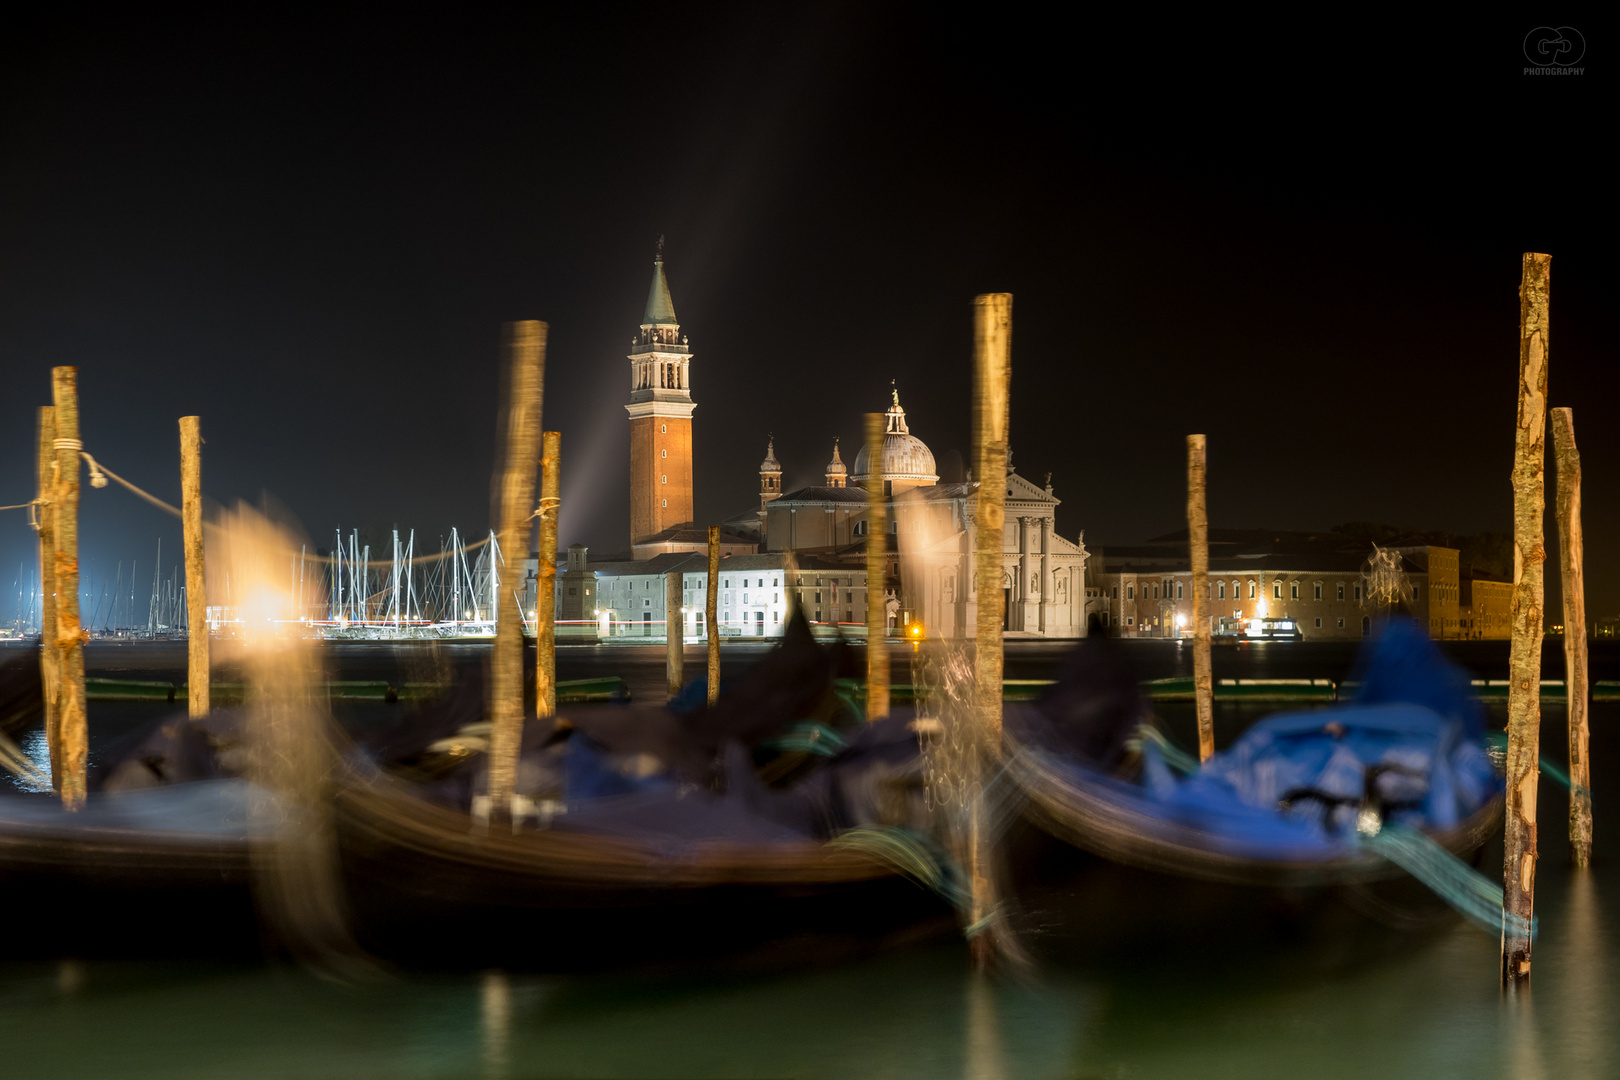 Venice by night #2